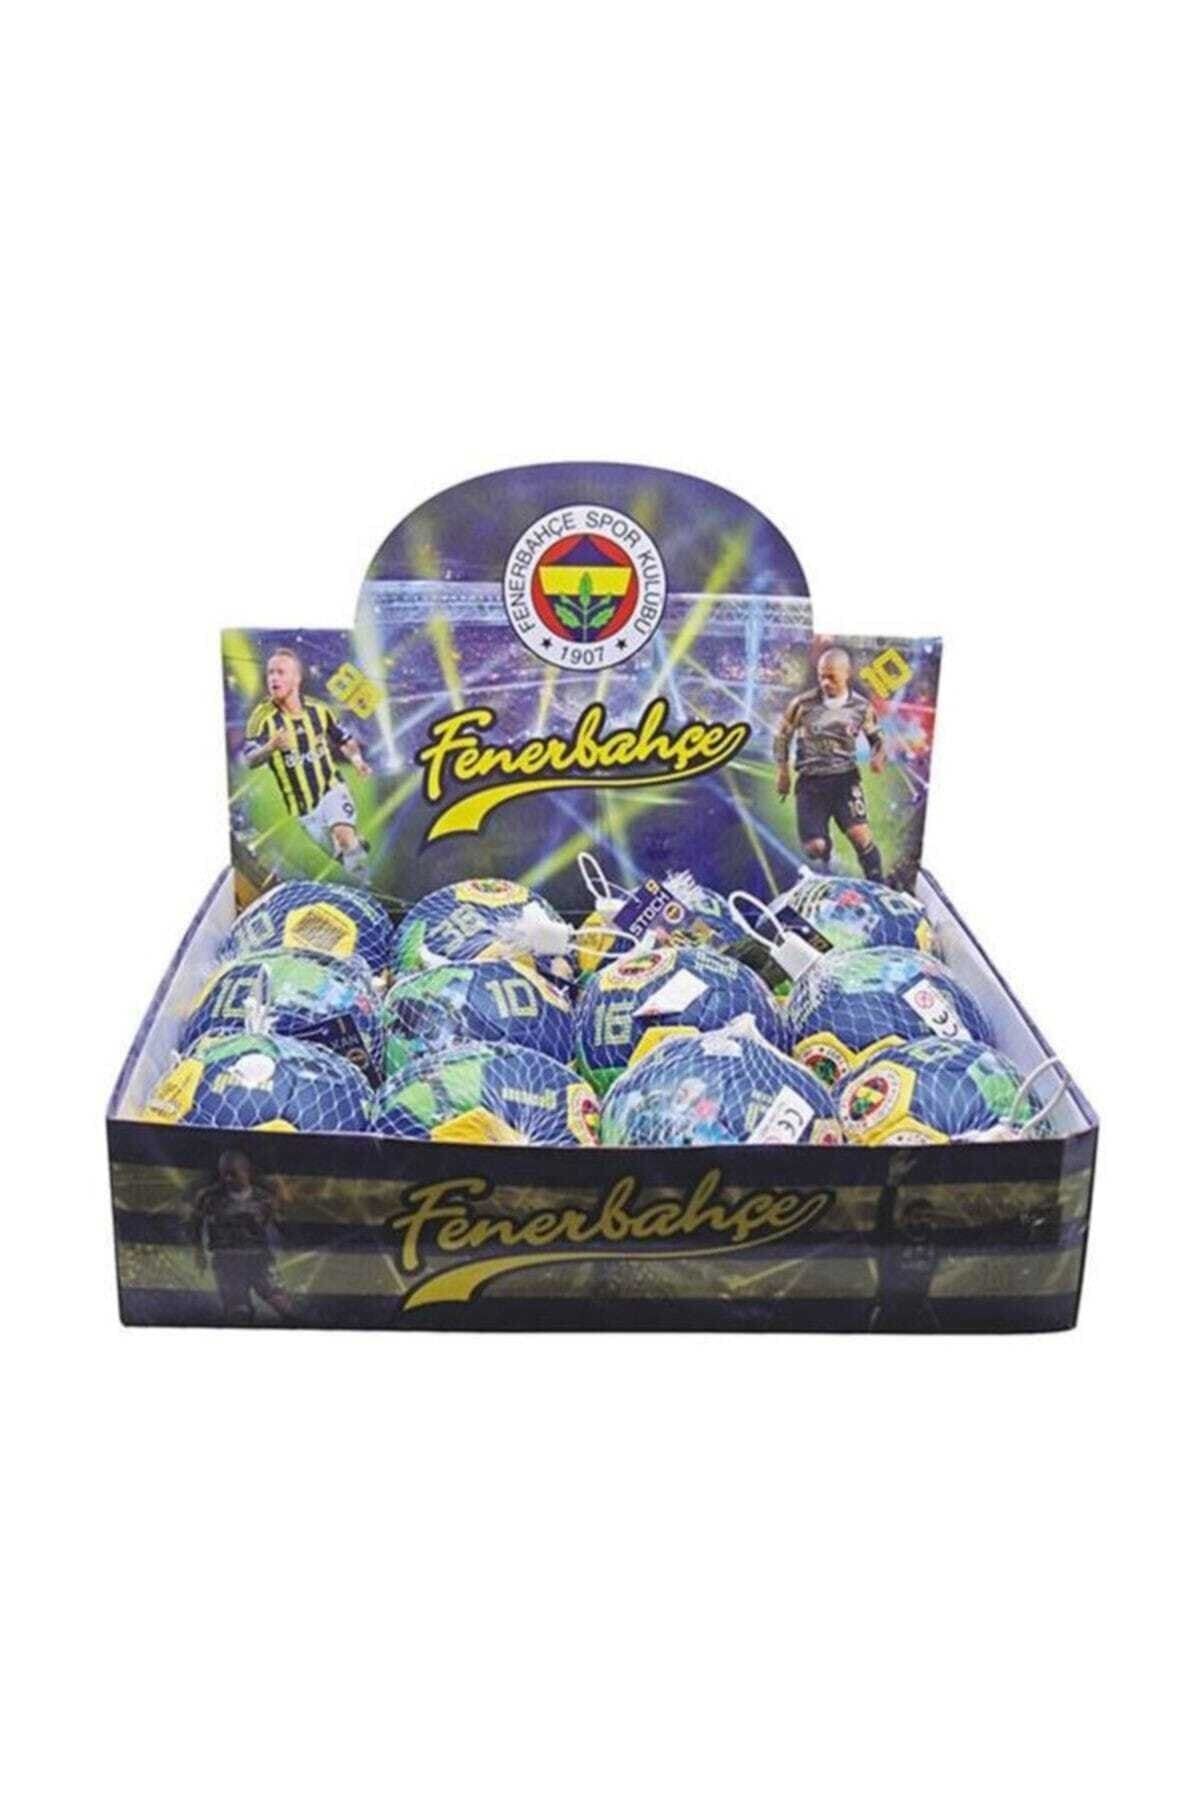 Fenerbahçe Interspor Fenerbahçe Soft Ball Oysoftball /